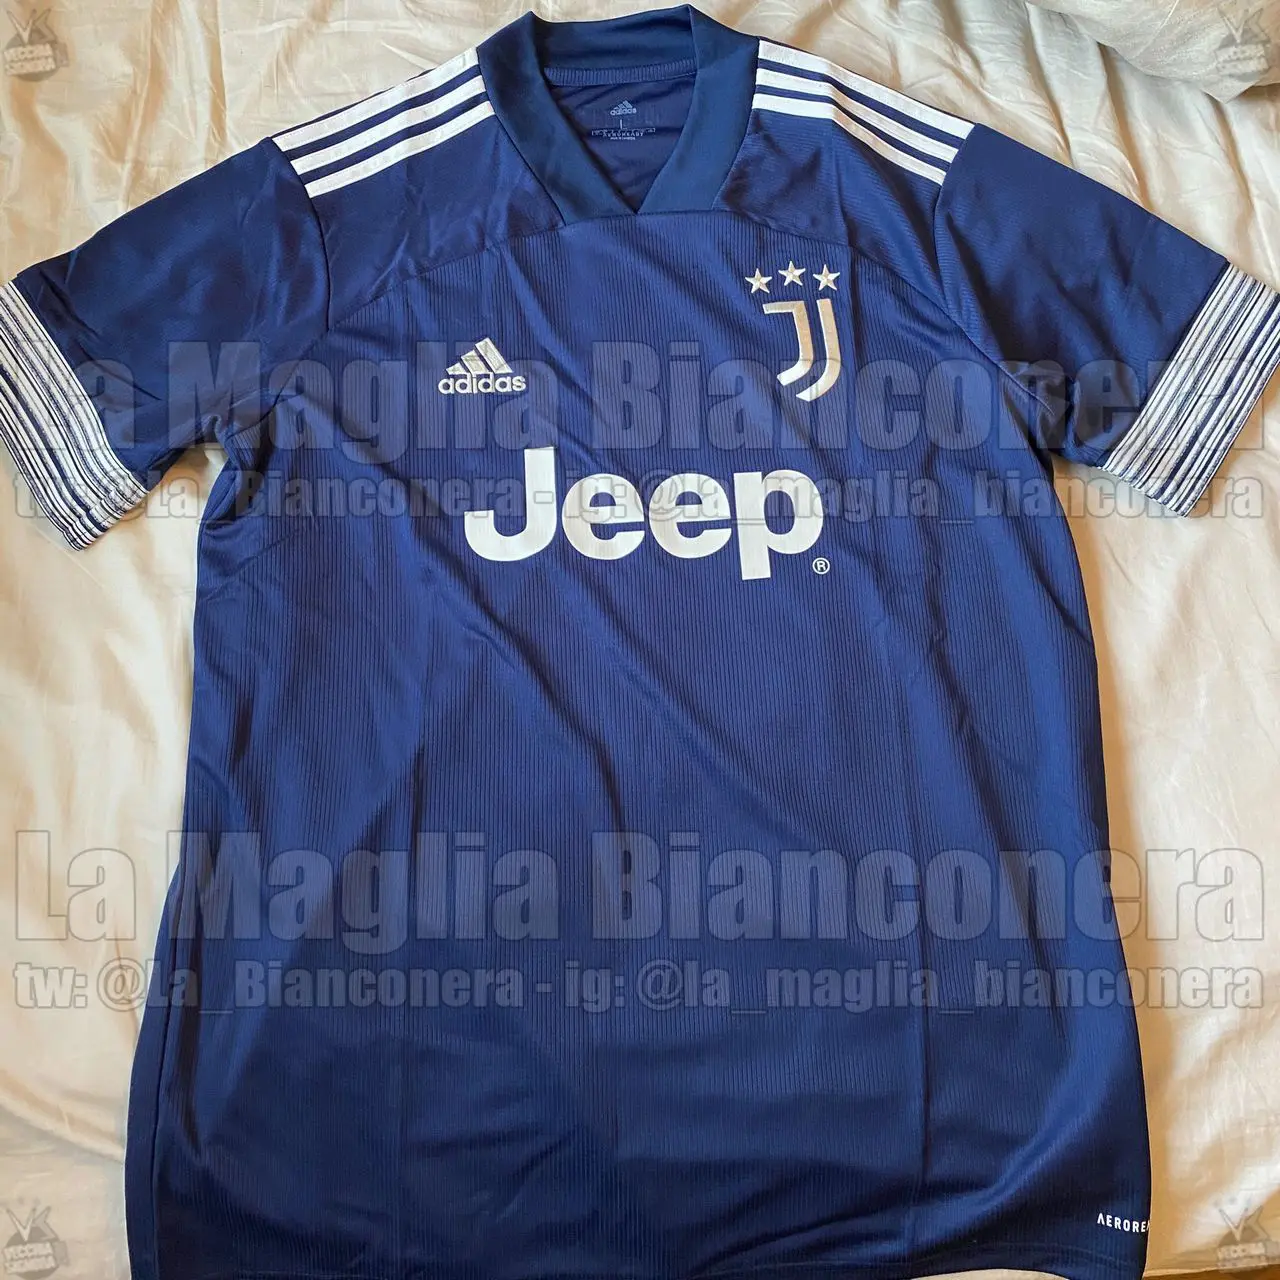 Seconda maglia Juventus 2020-2021: le prime foto reali - Jmania.it